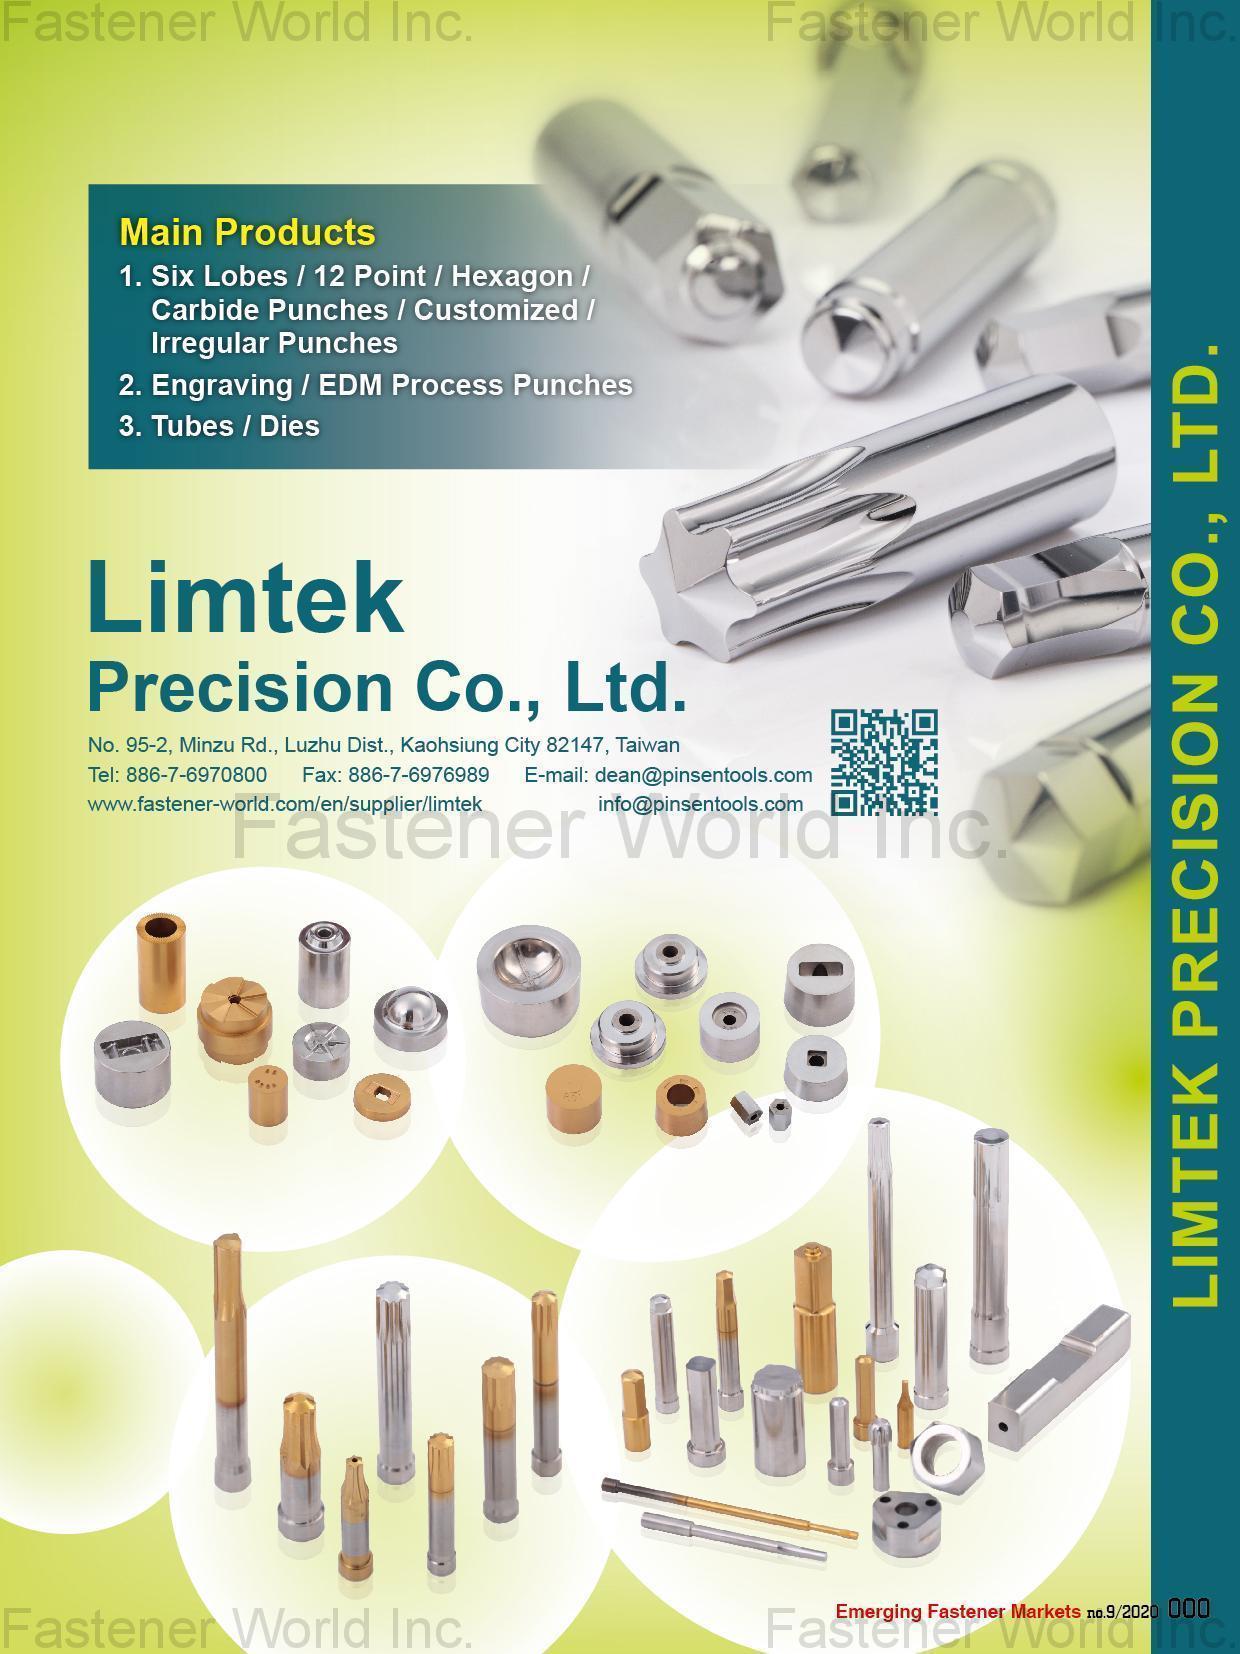 LIMTEK PRECISION CO, LTD. , Six Lobes / 12 Point / Hexagon / Carbide Punches / Customized / Irregular Punches / Engraving / EDM Process Punches / Tubes / Dies